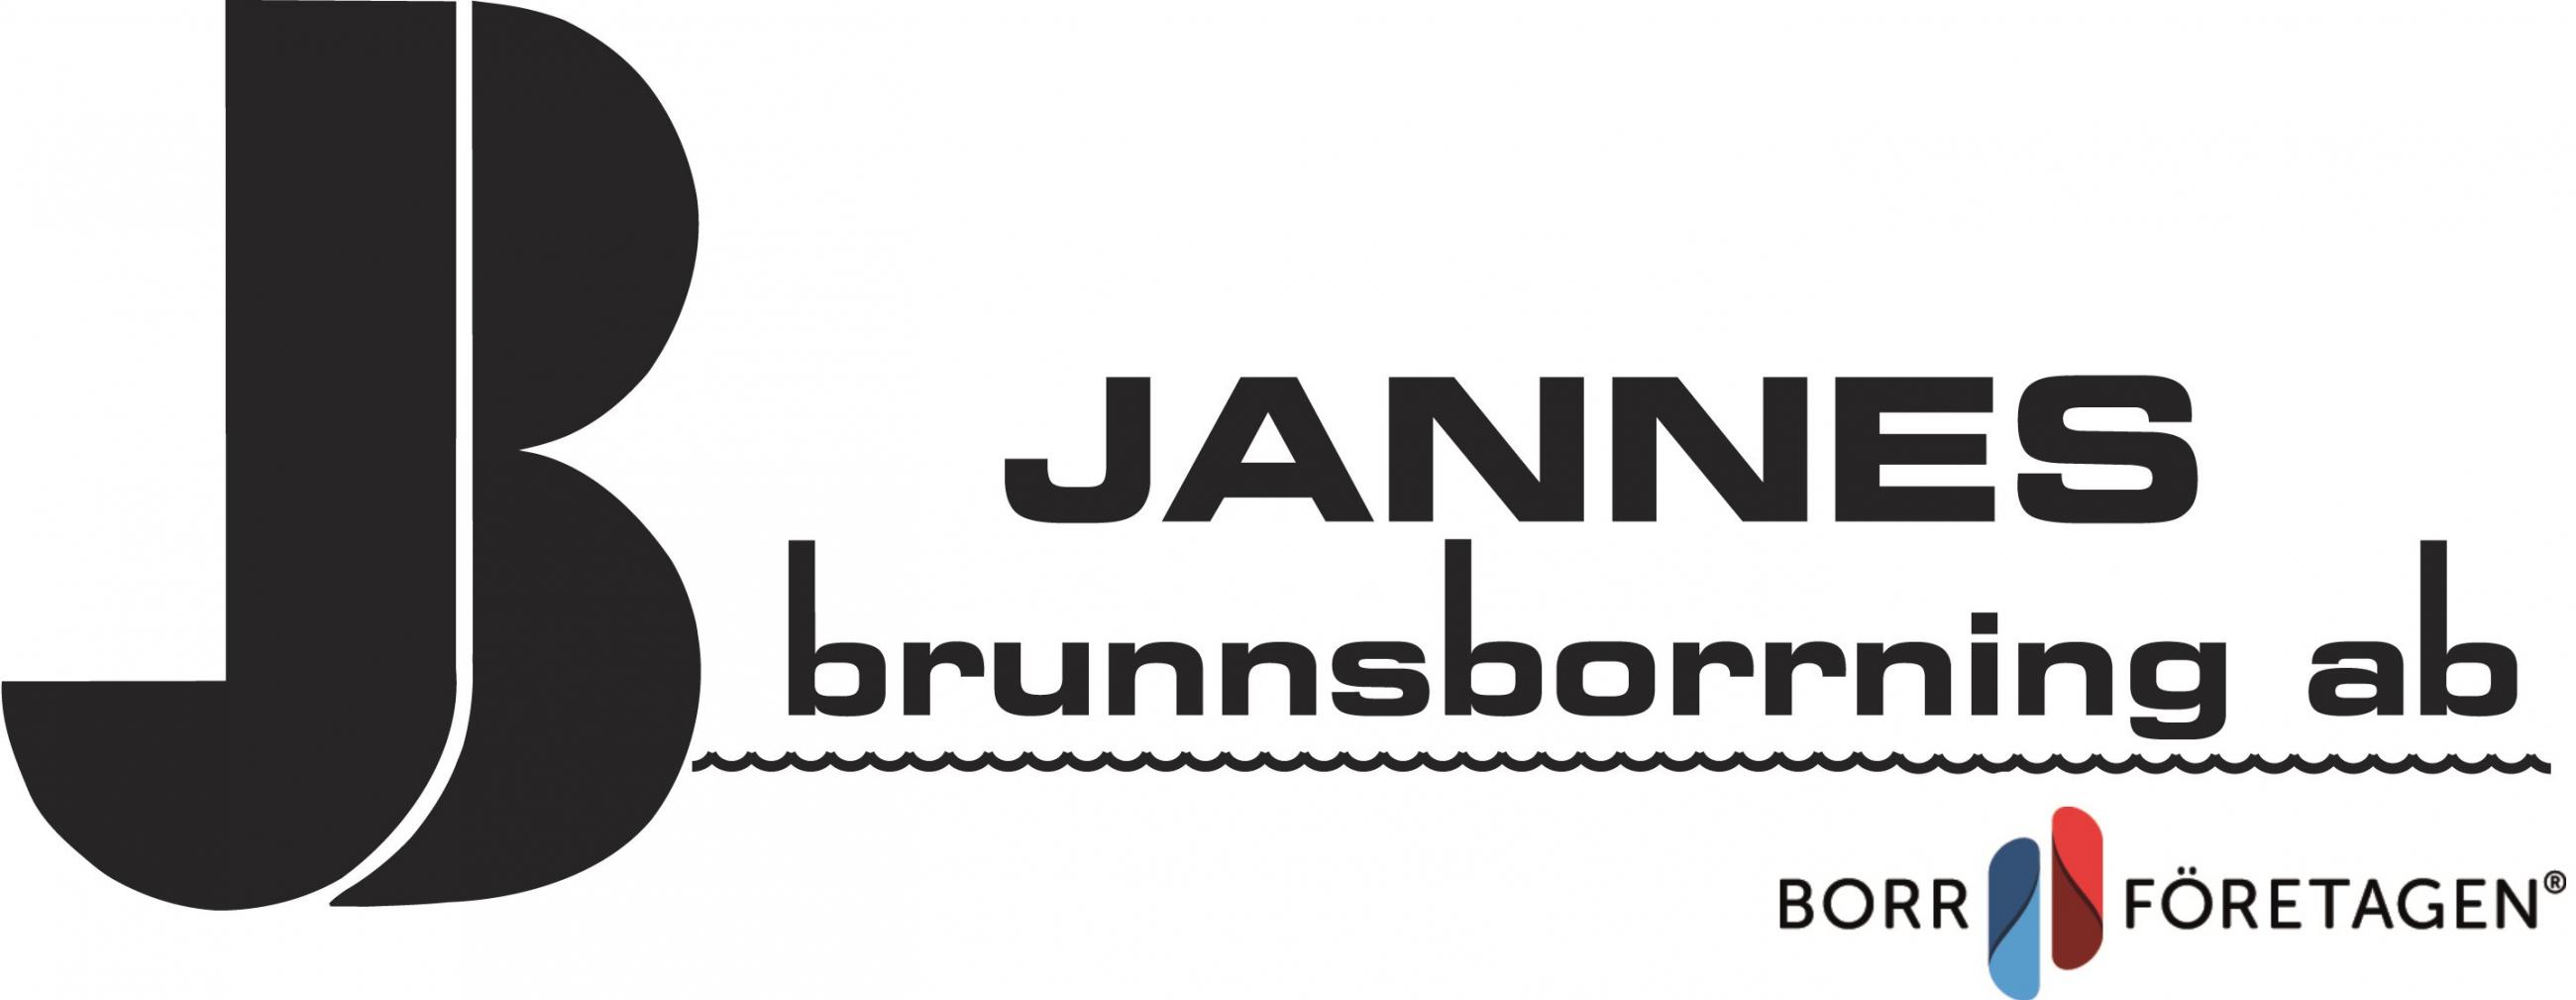 Jannes Brunnsborrning AB